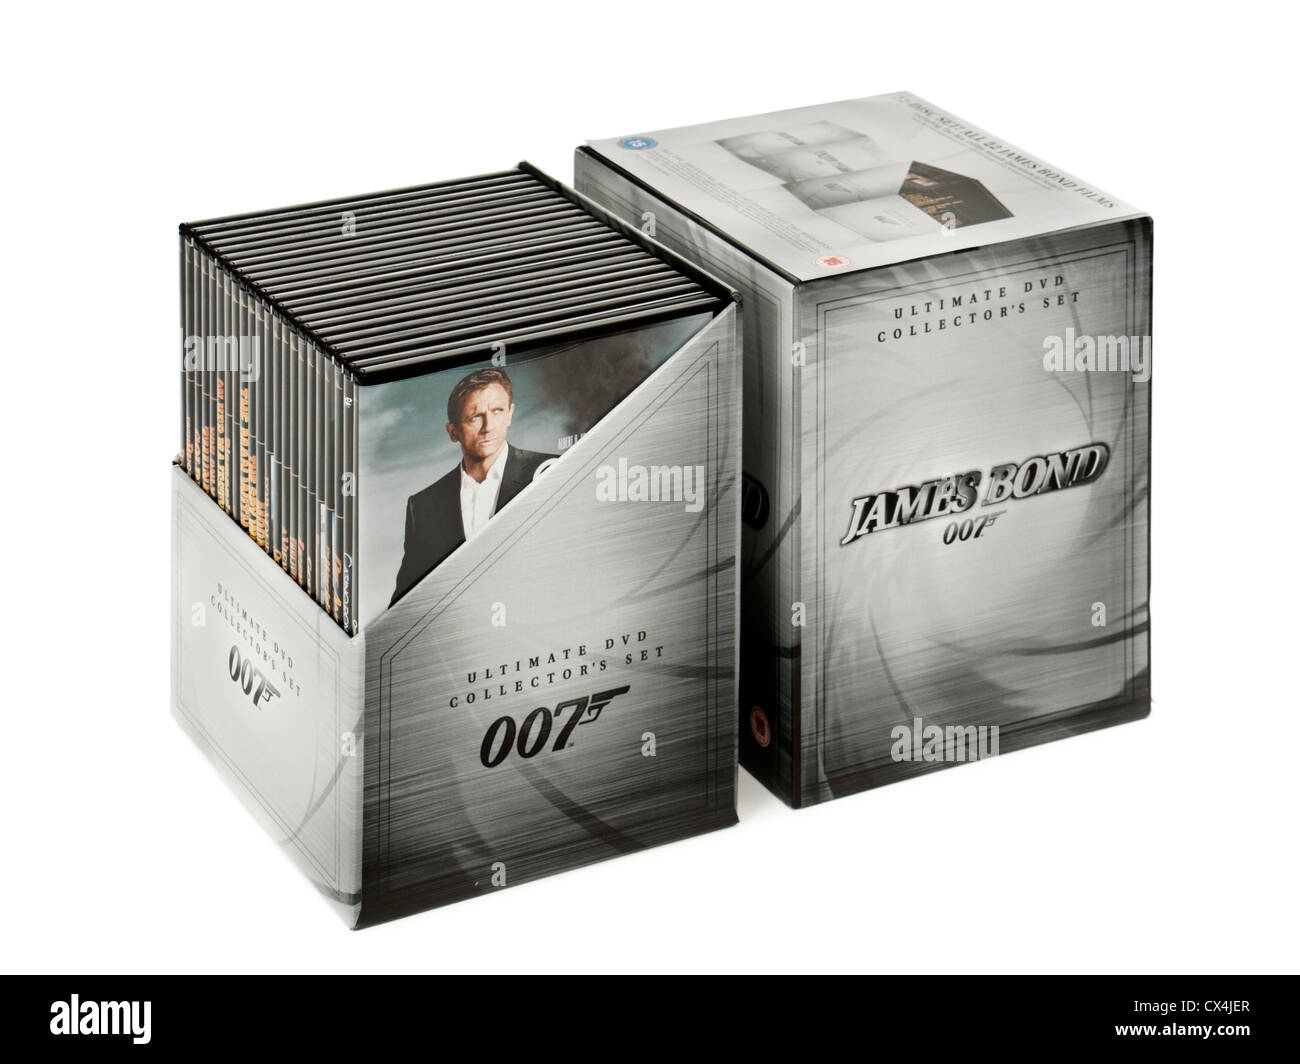 https://c8.alamy.com/comp/CX4JER/james-bond-007-ultimate-dvd-collectors-box-set-CX4JER.jpg